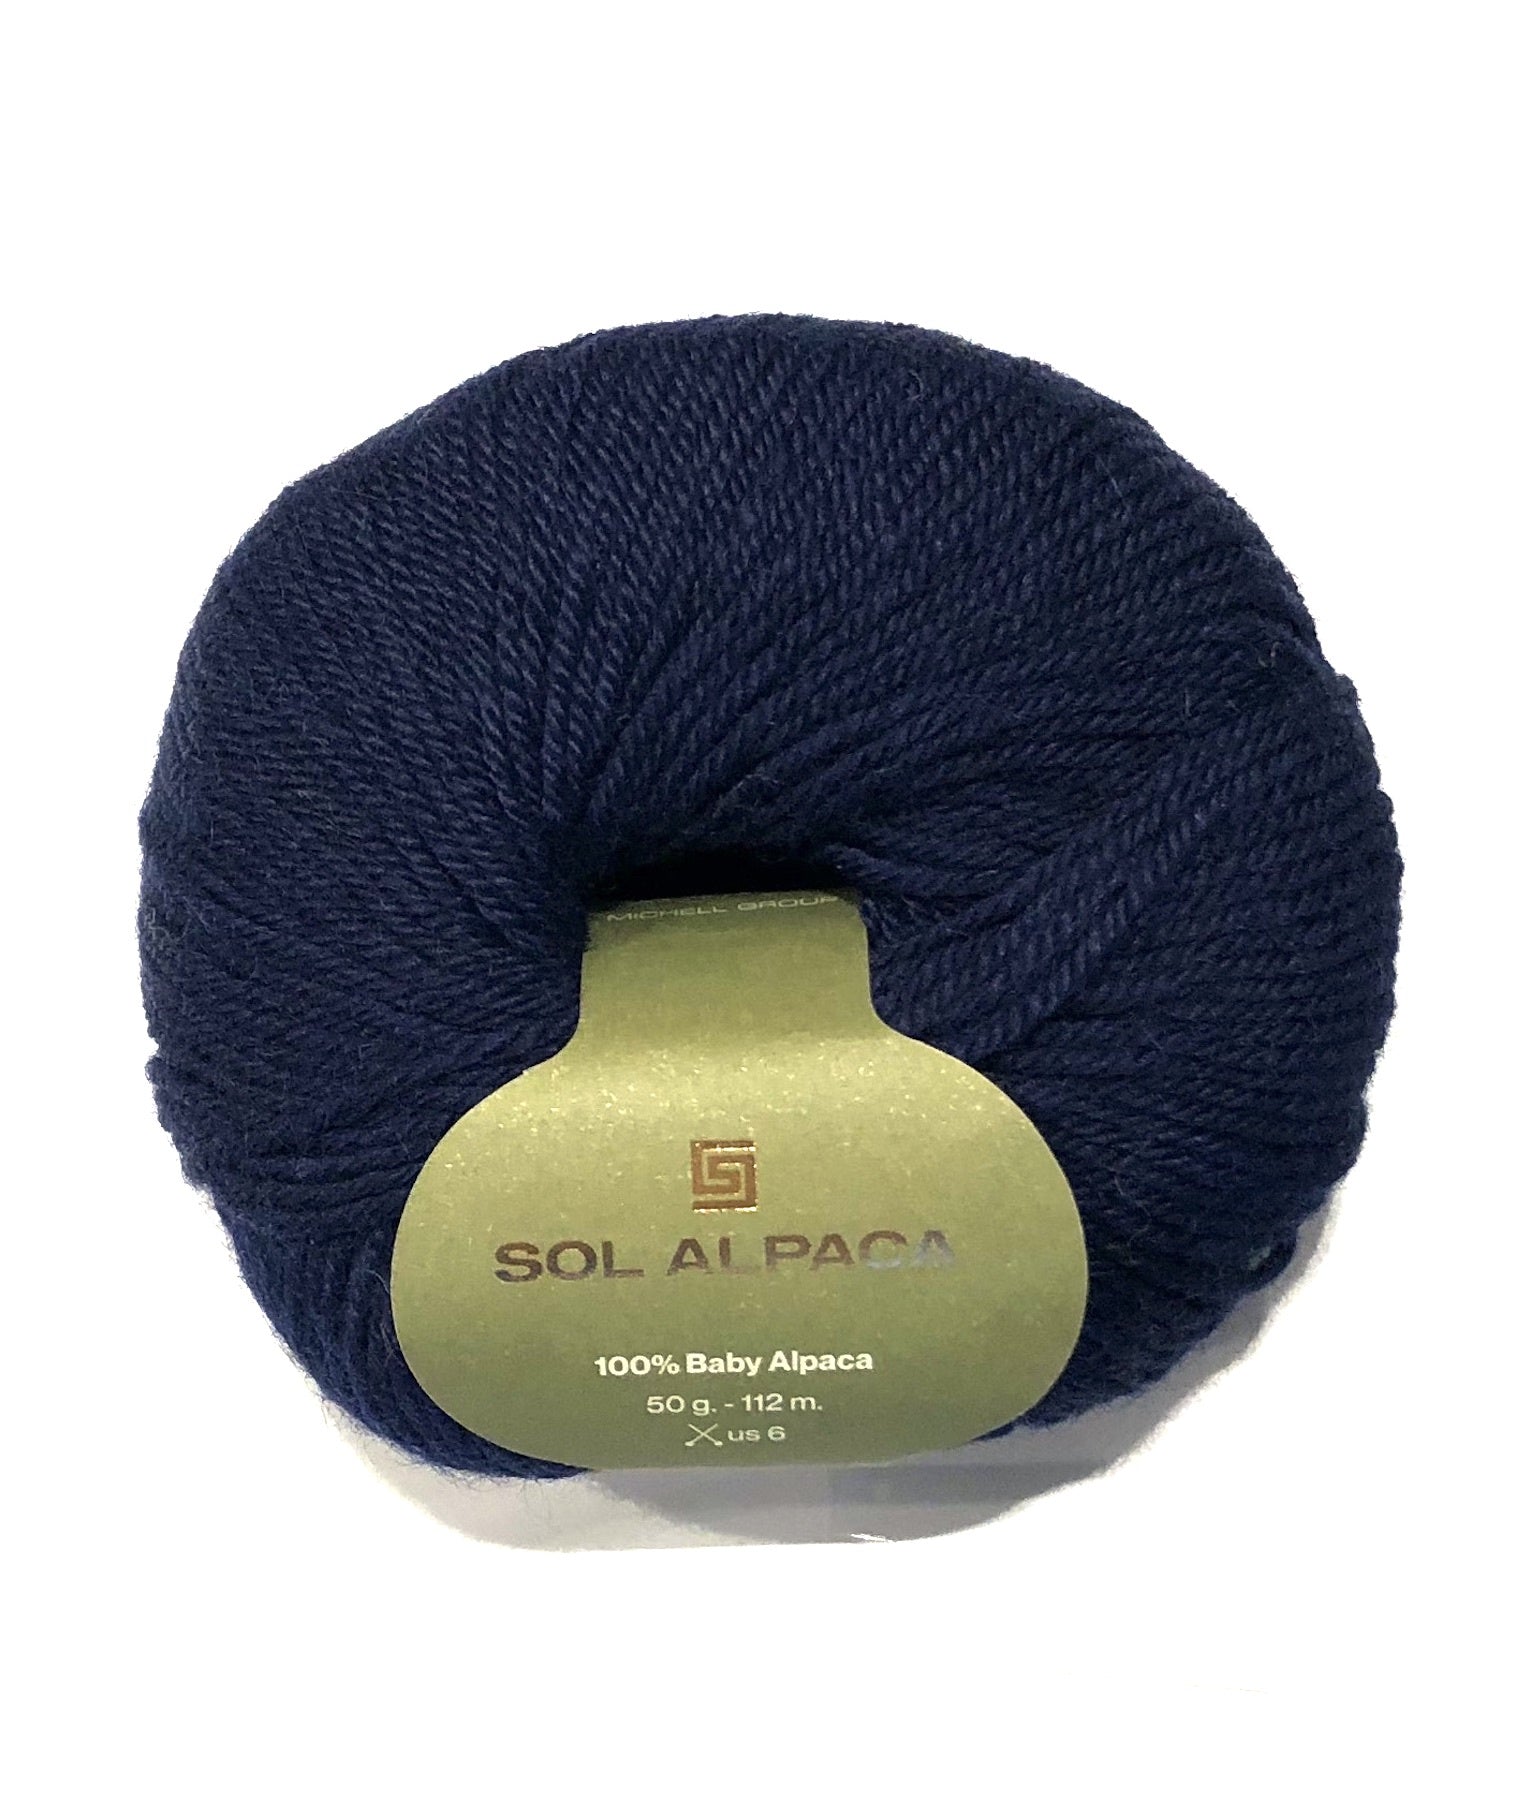 8-ply Baby Alpaca Yarn Ball AZ1660 Navy Blue